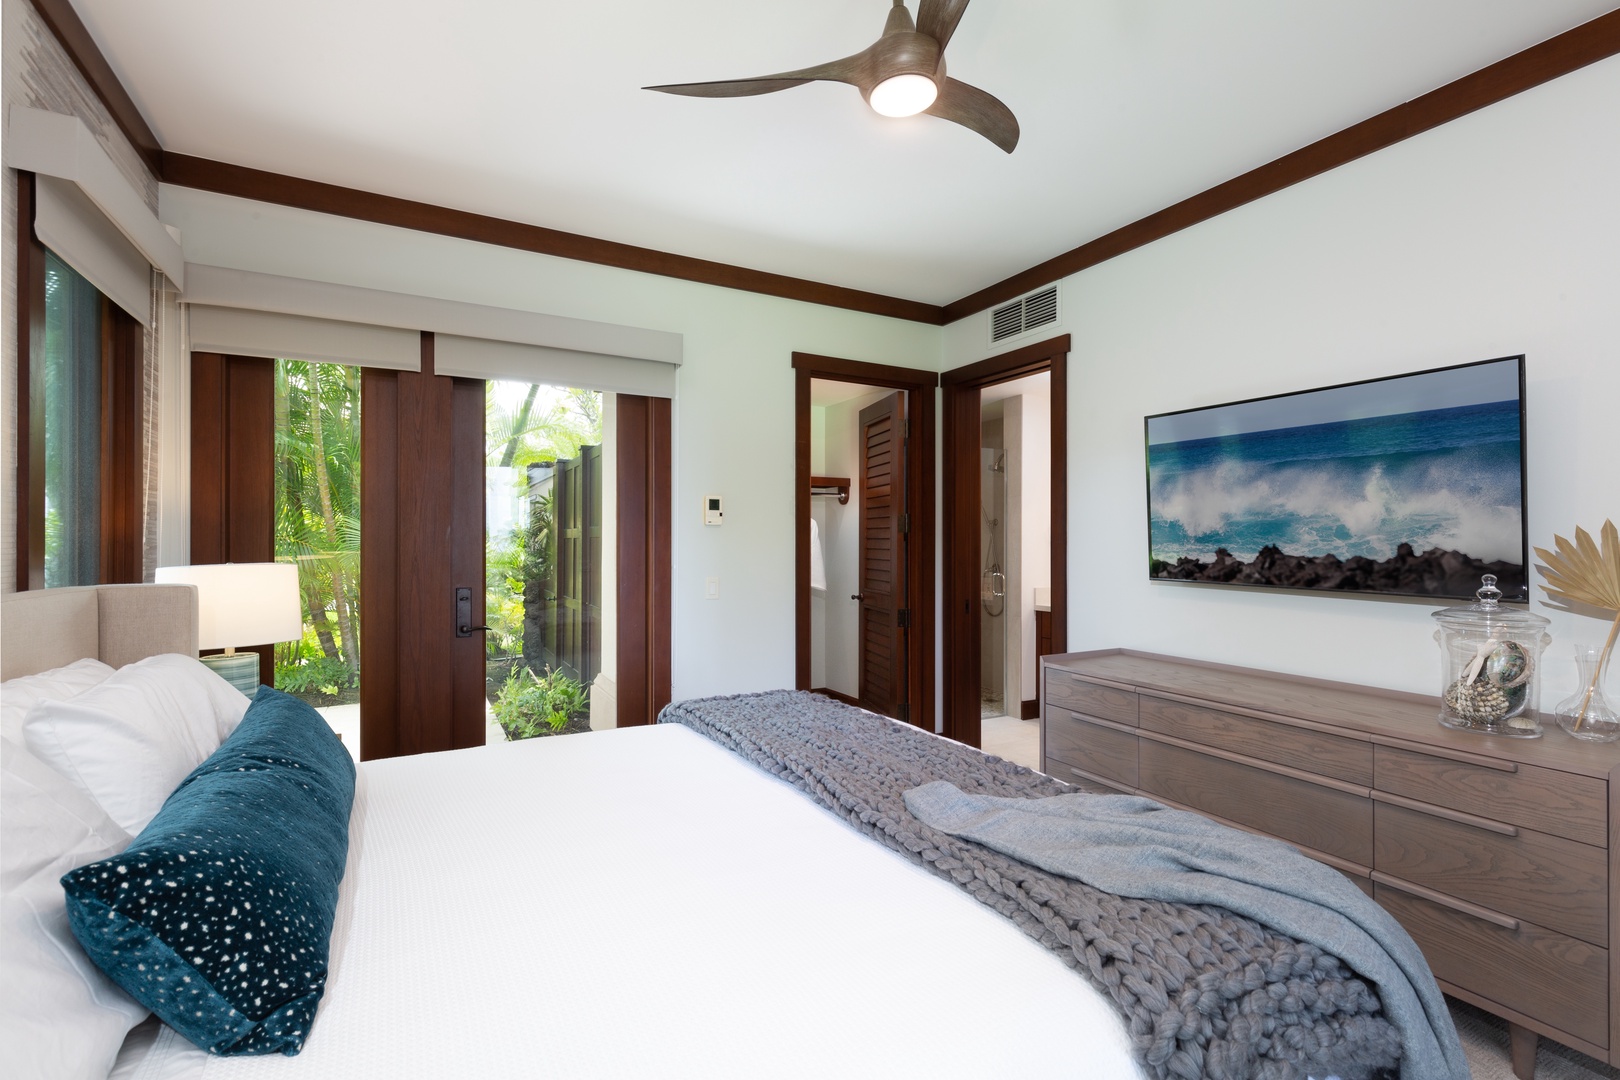 Kailua-Kona Vacation Rentals, 3BD Hali'ipua Villa (120) at Four Seasons Resort at Hualalai - Alternate view of beautiful furnished third bedroom